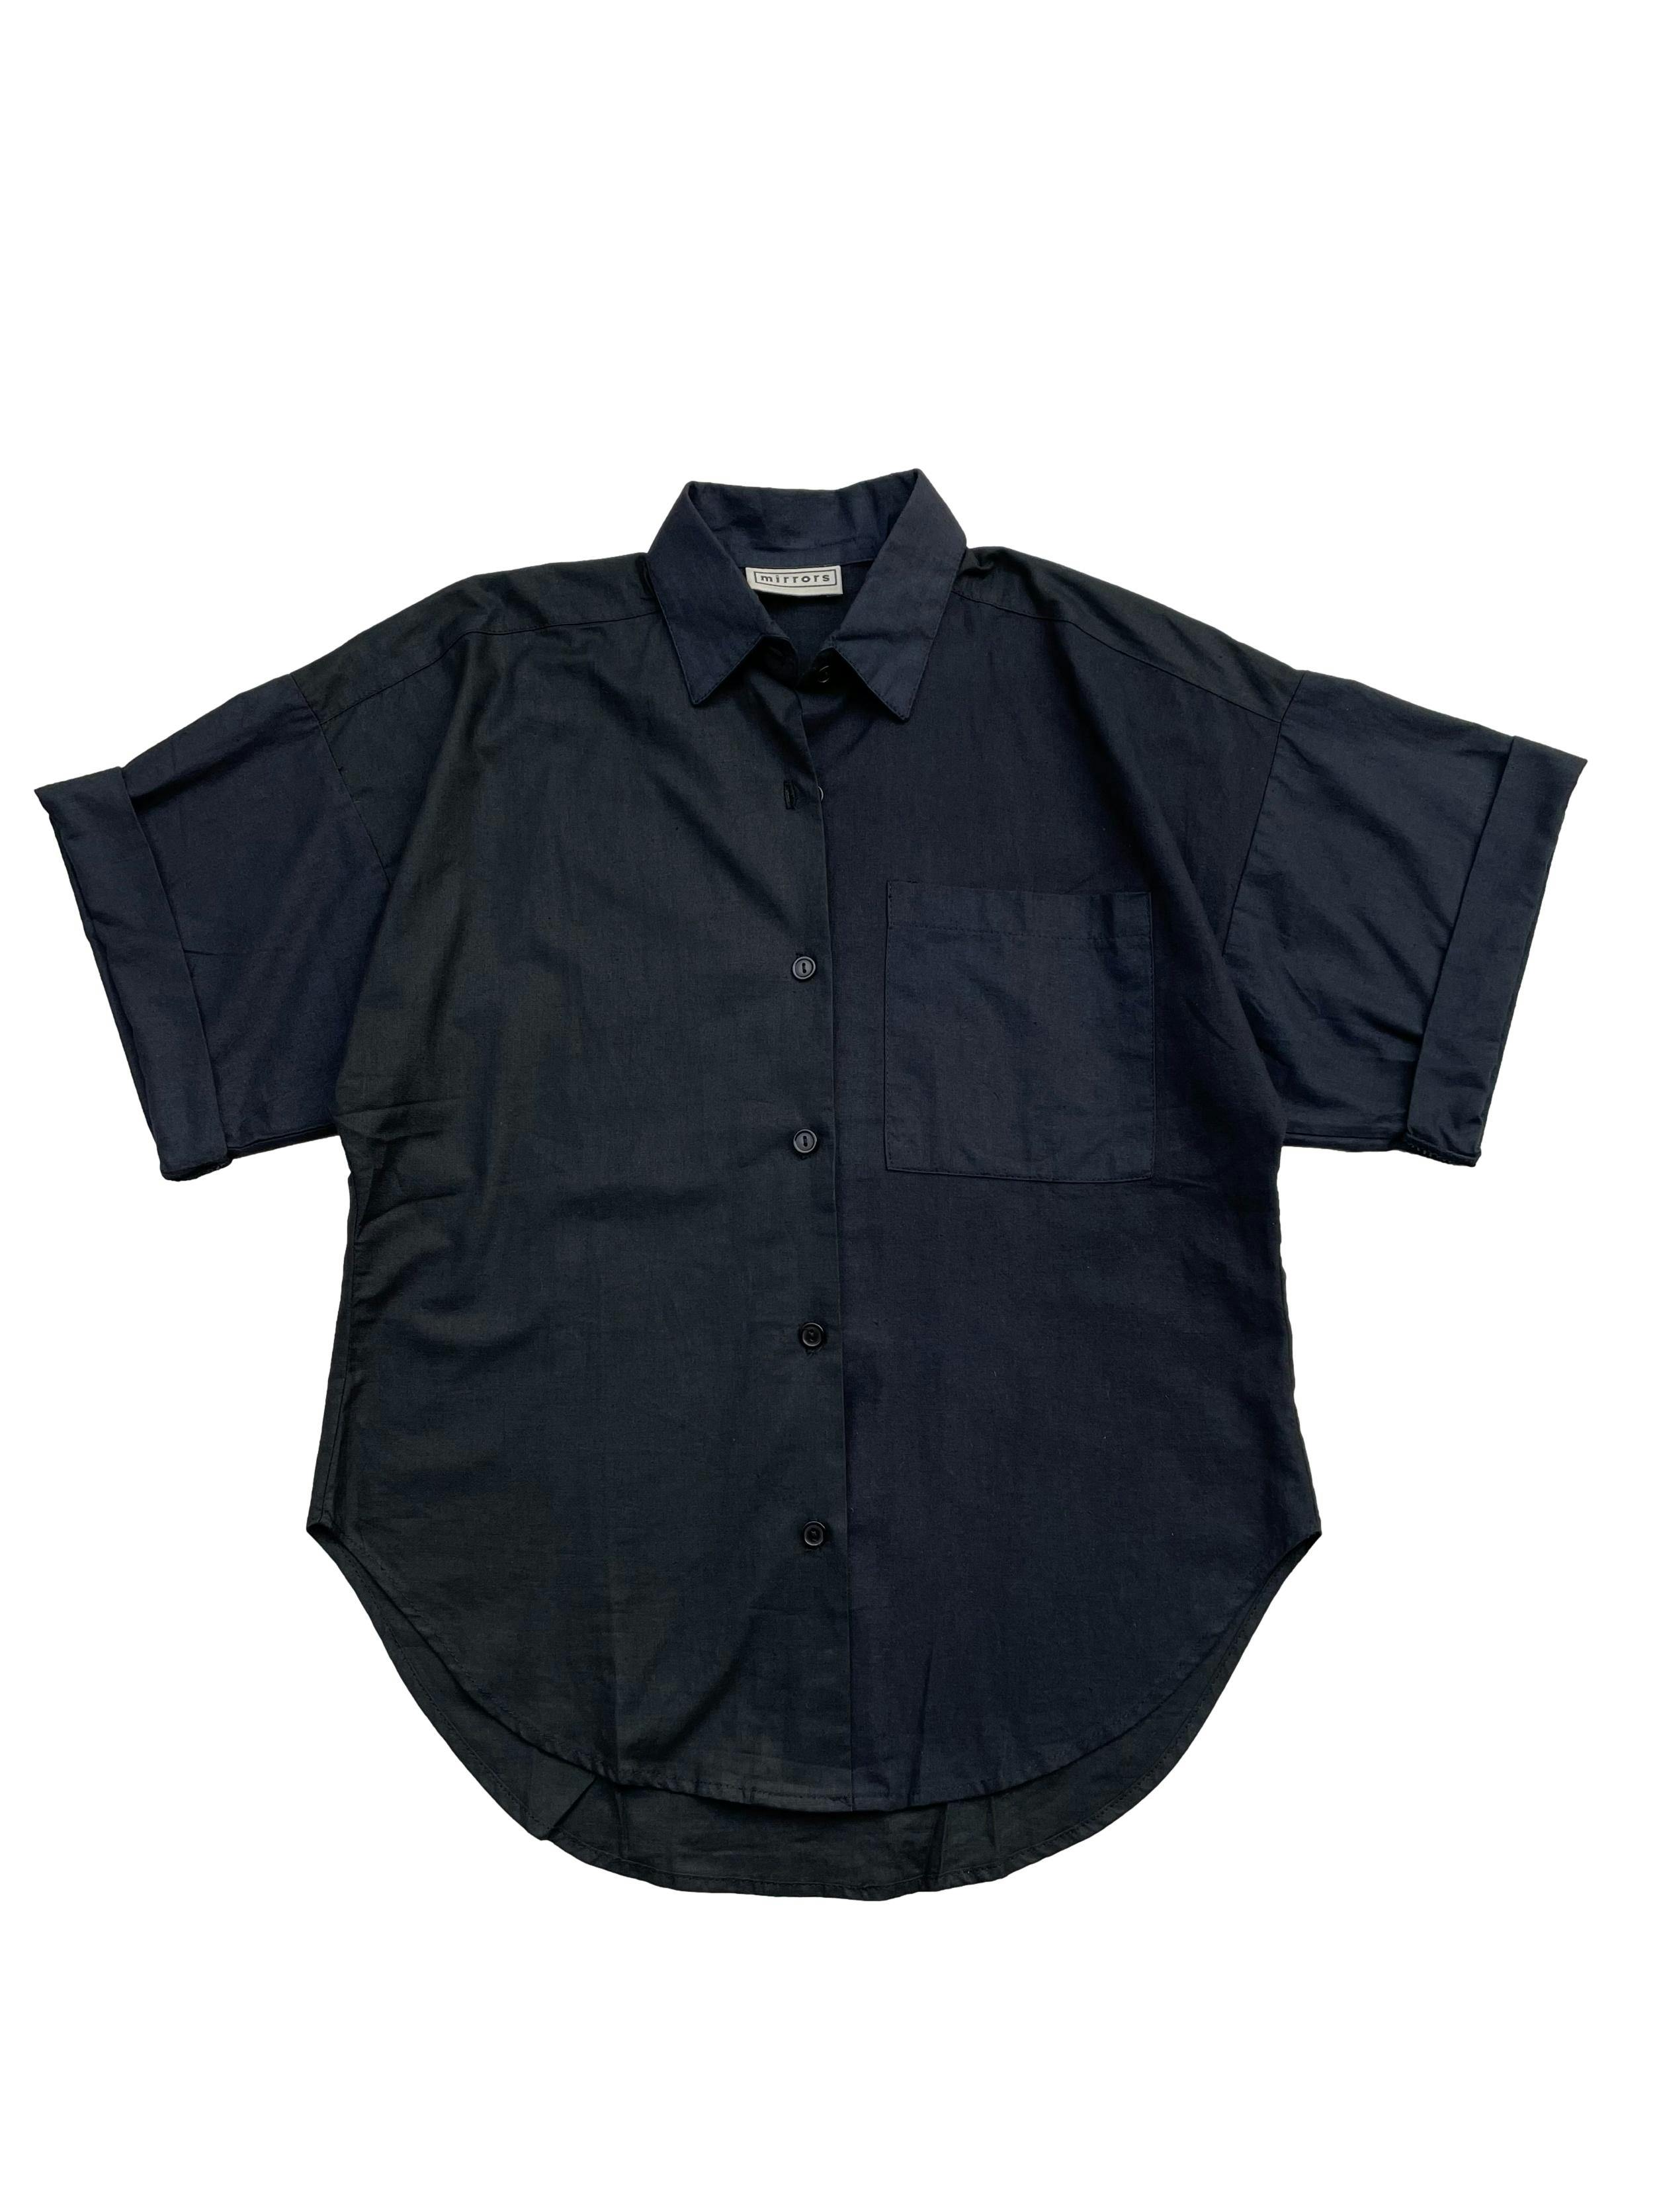 Blusa vintage oversize negra y azul marino, bolsillo frontal. Largo 62cm.